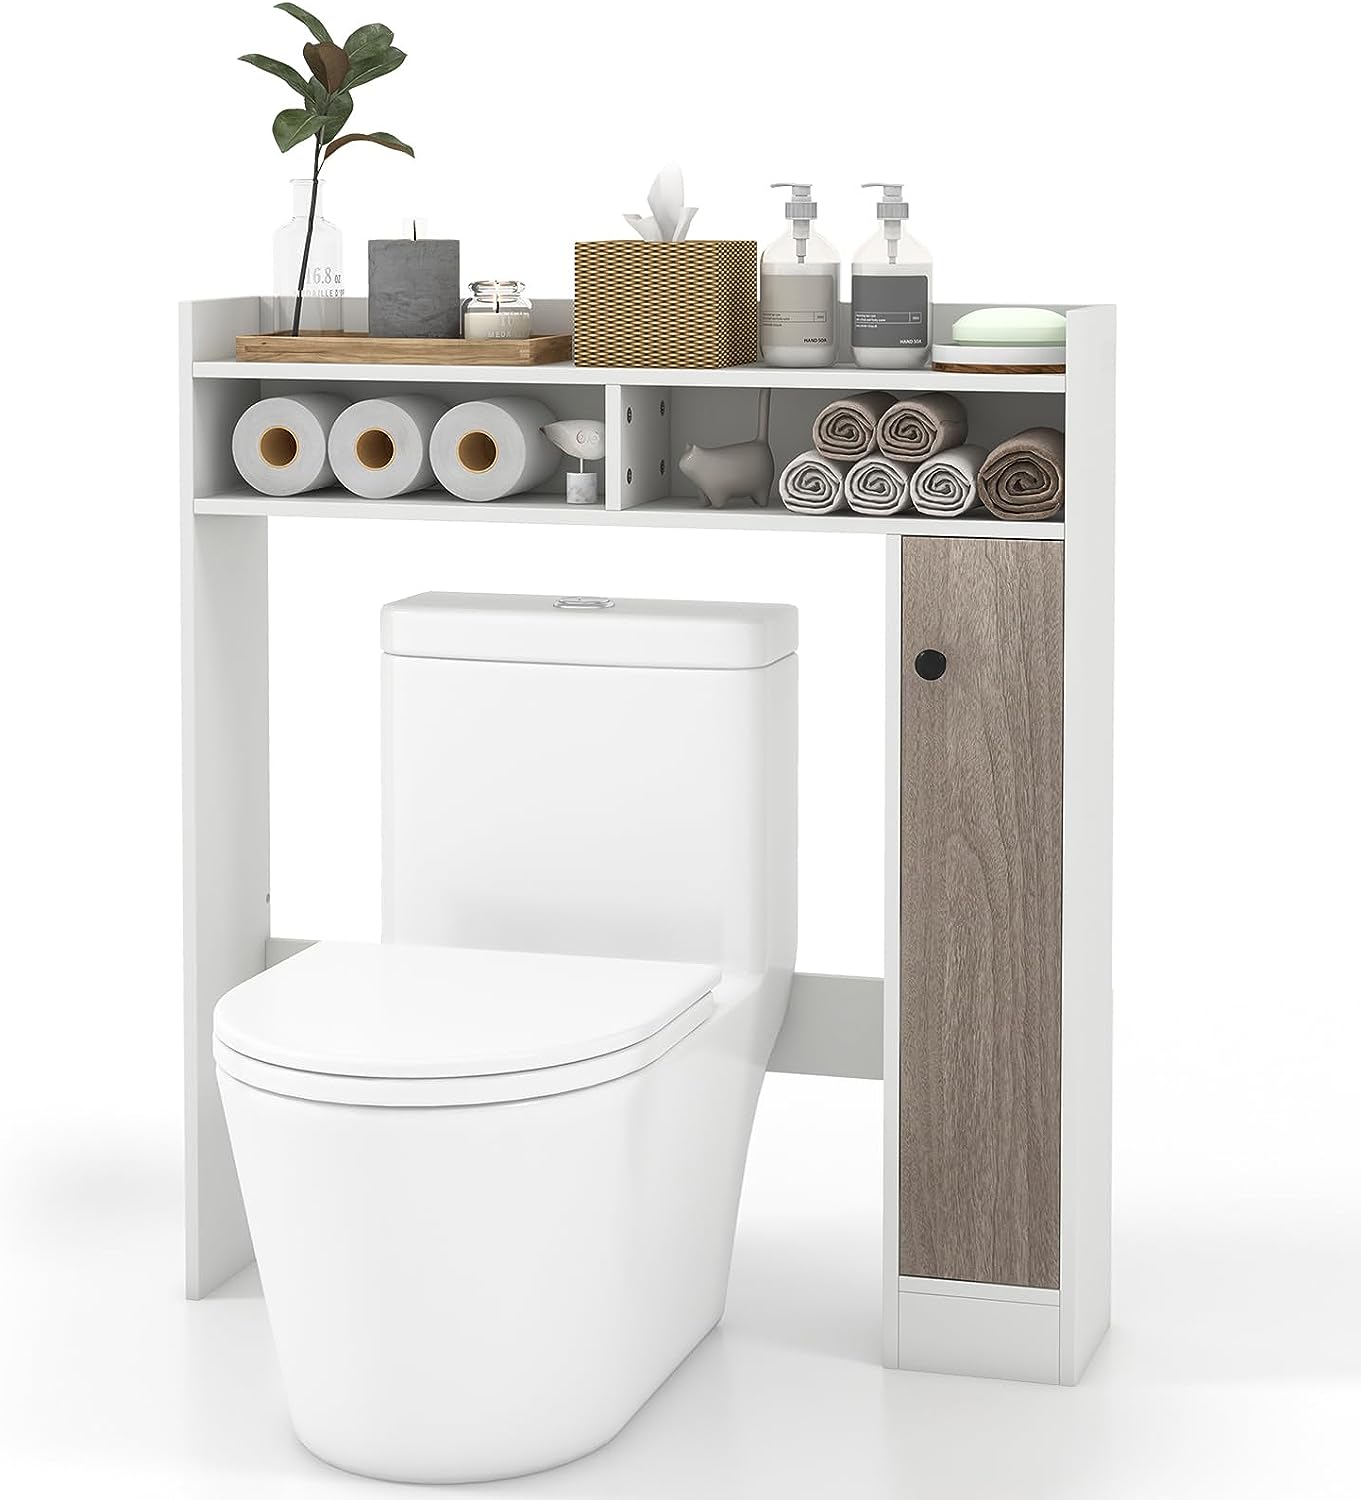 Giantex Over-The-Toilet Storage Rack, Bathroom Freestanding Space Saver with 1-Door Side Storage Cabinet